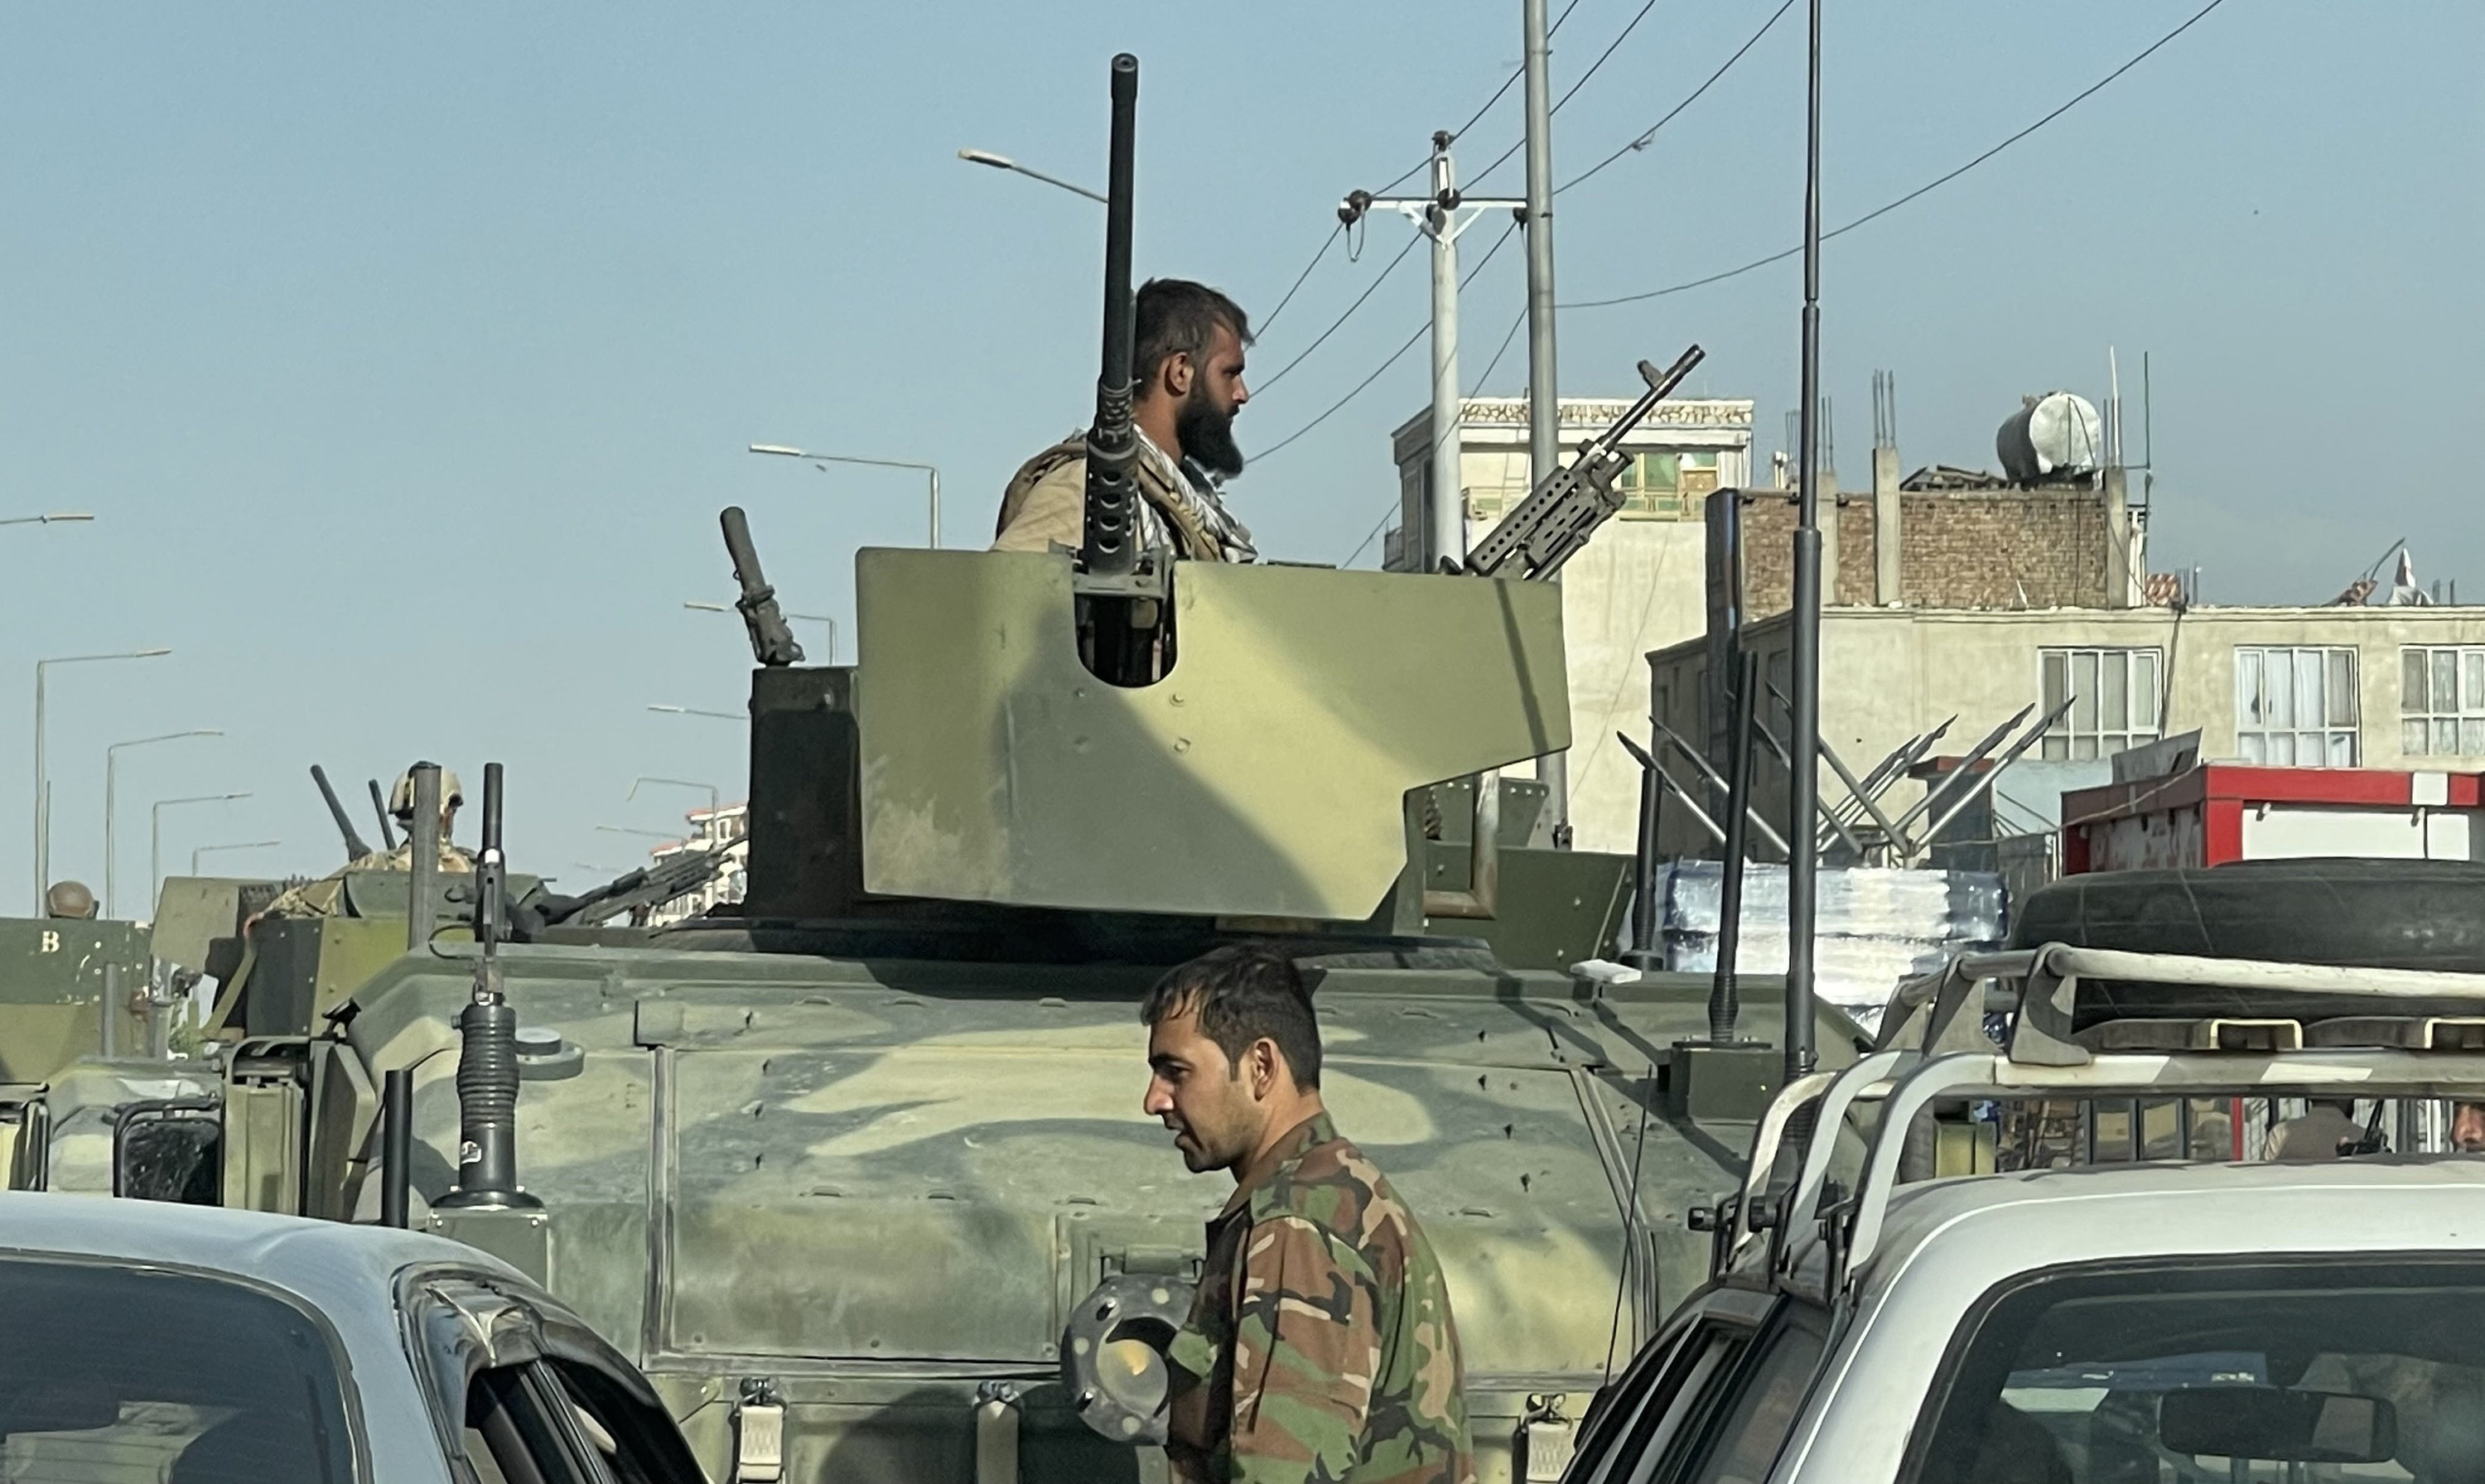 A man appears atop a tank amid traffic